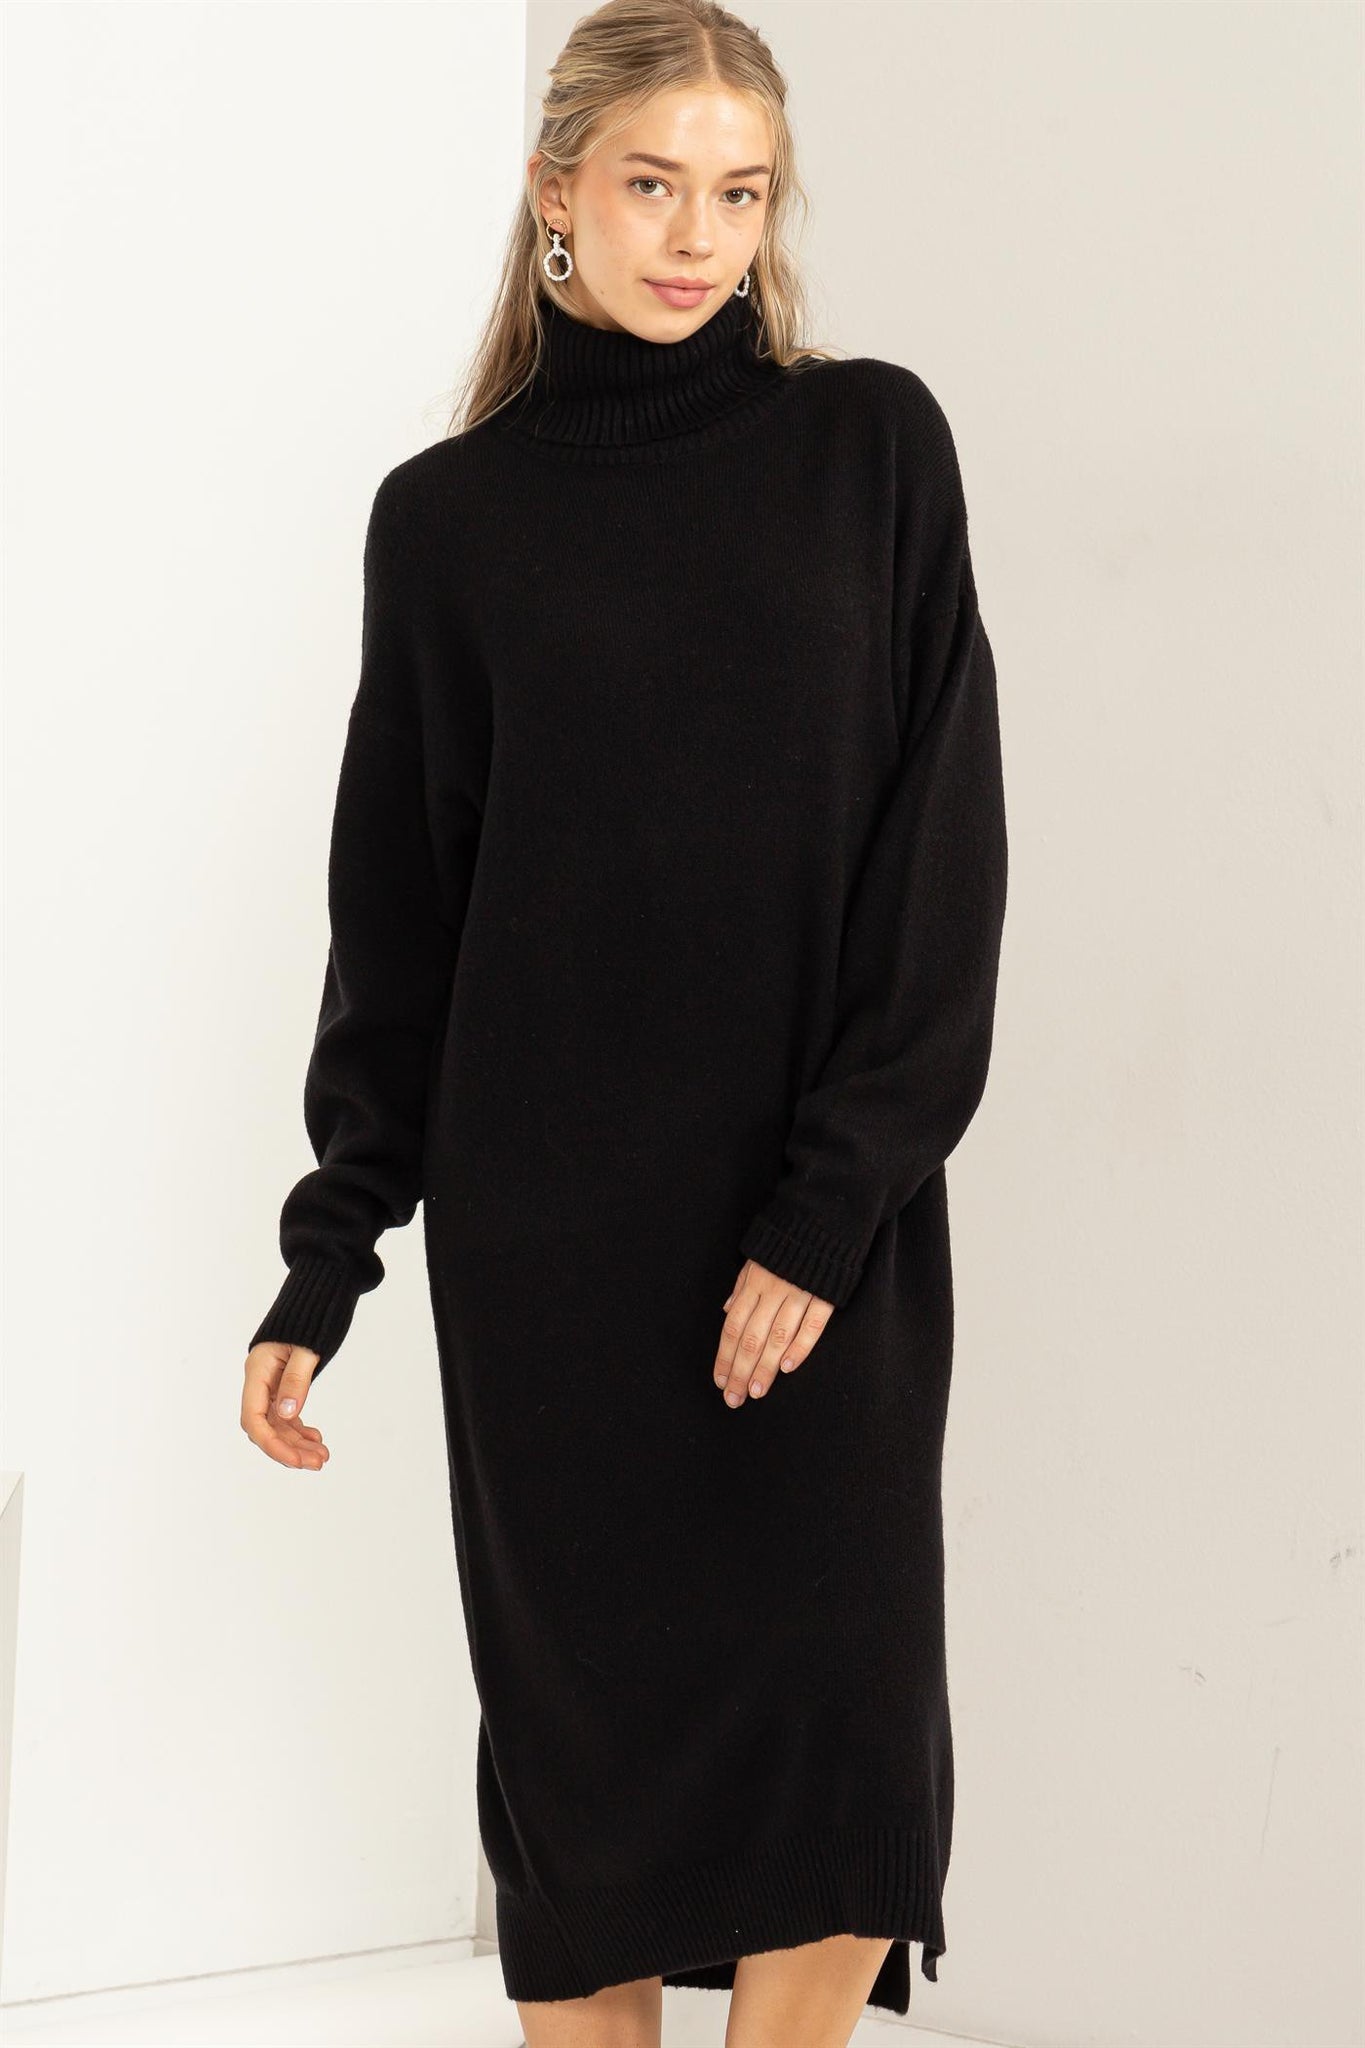 Cute Black Sweater Dress - Long Sleeve Dress - Turtleneck Dress